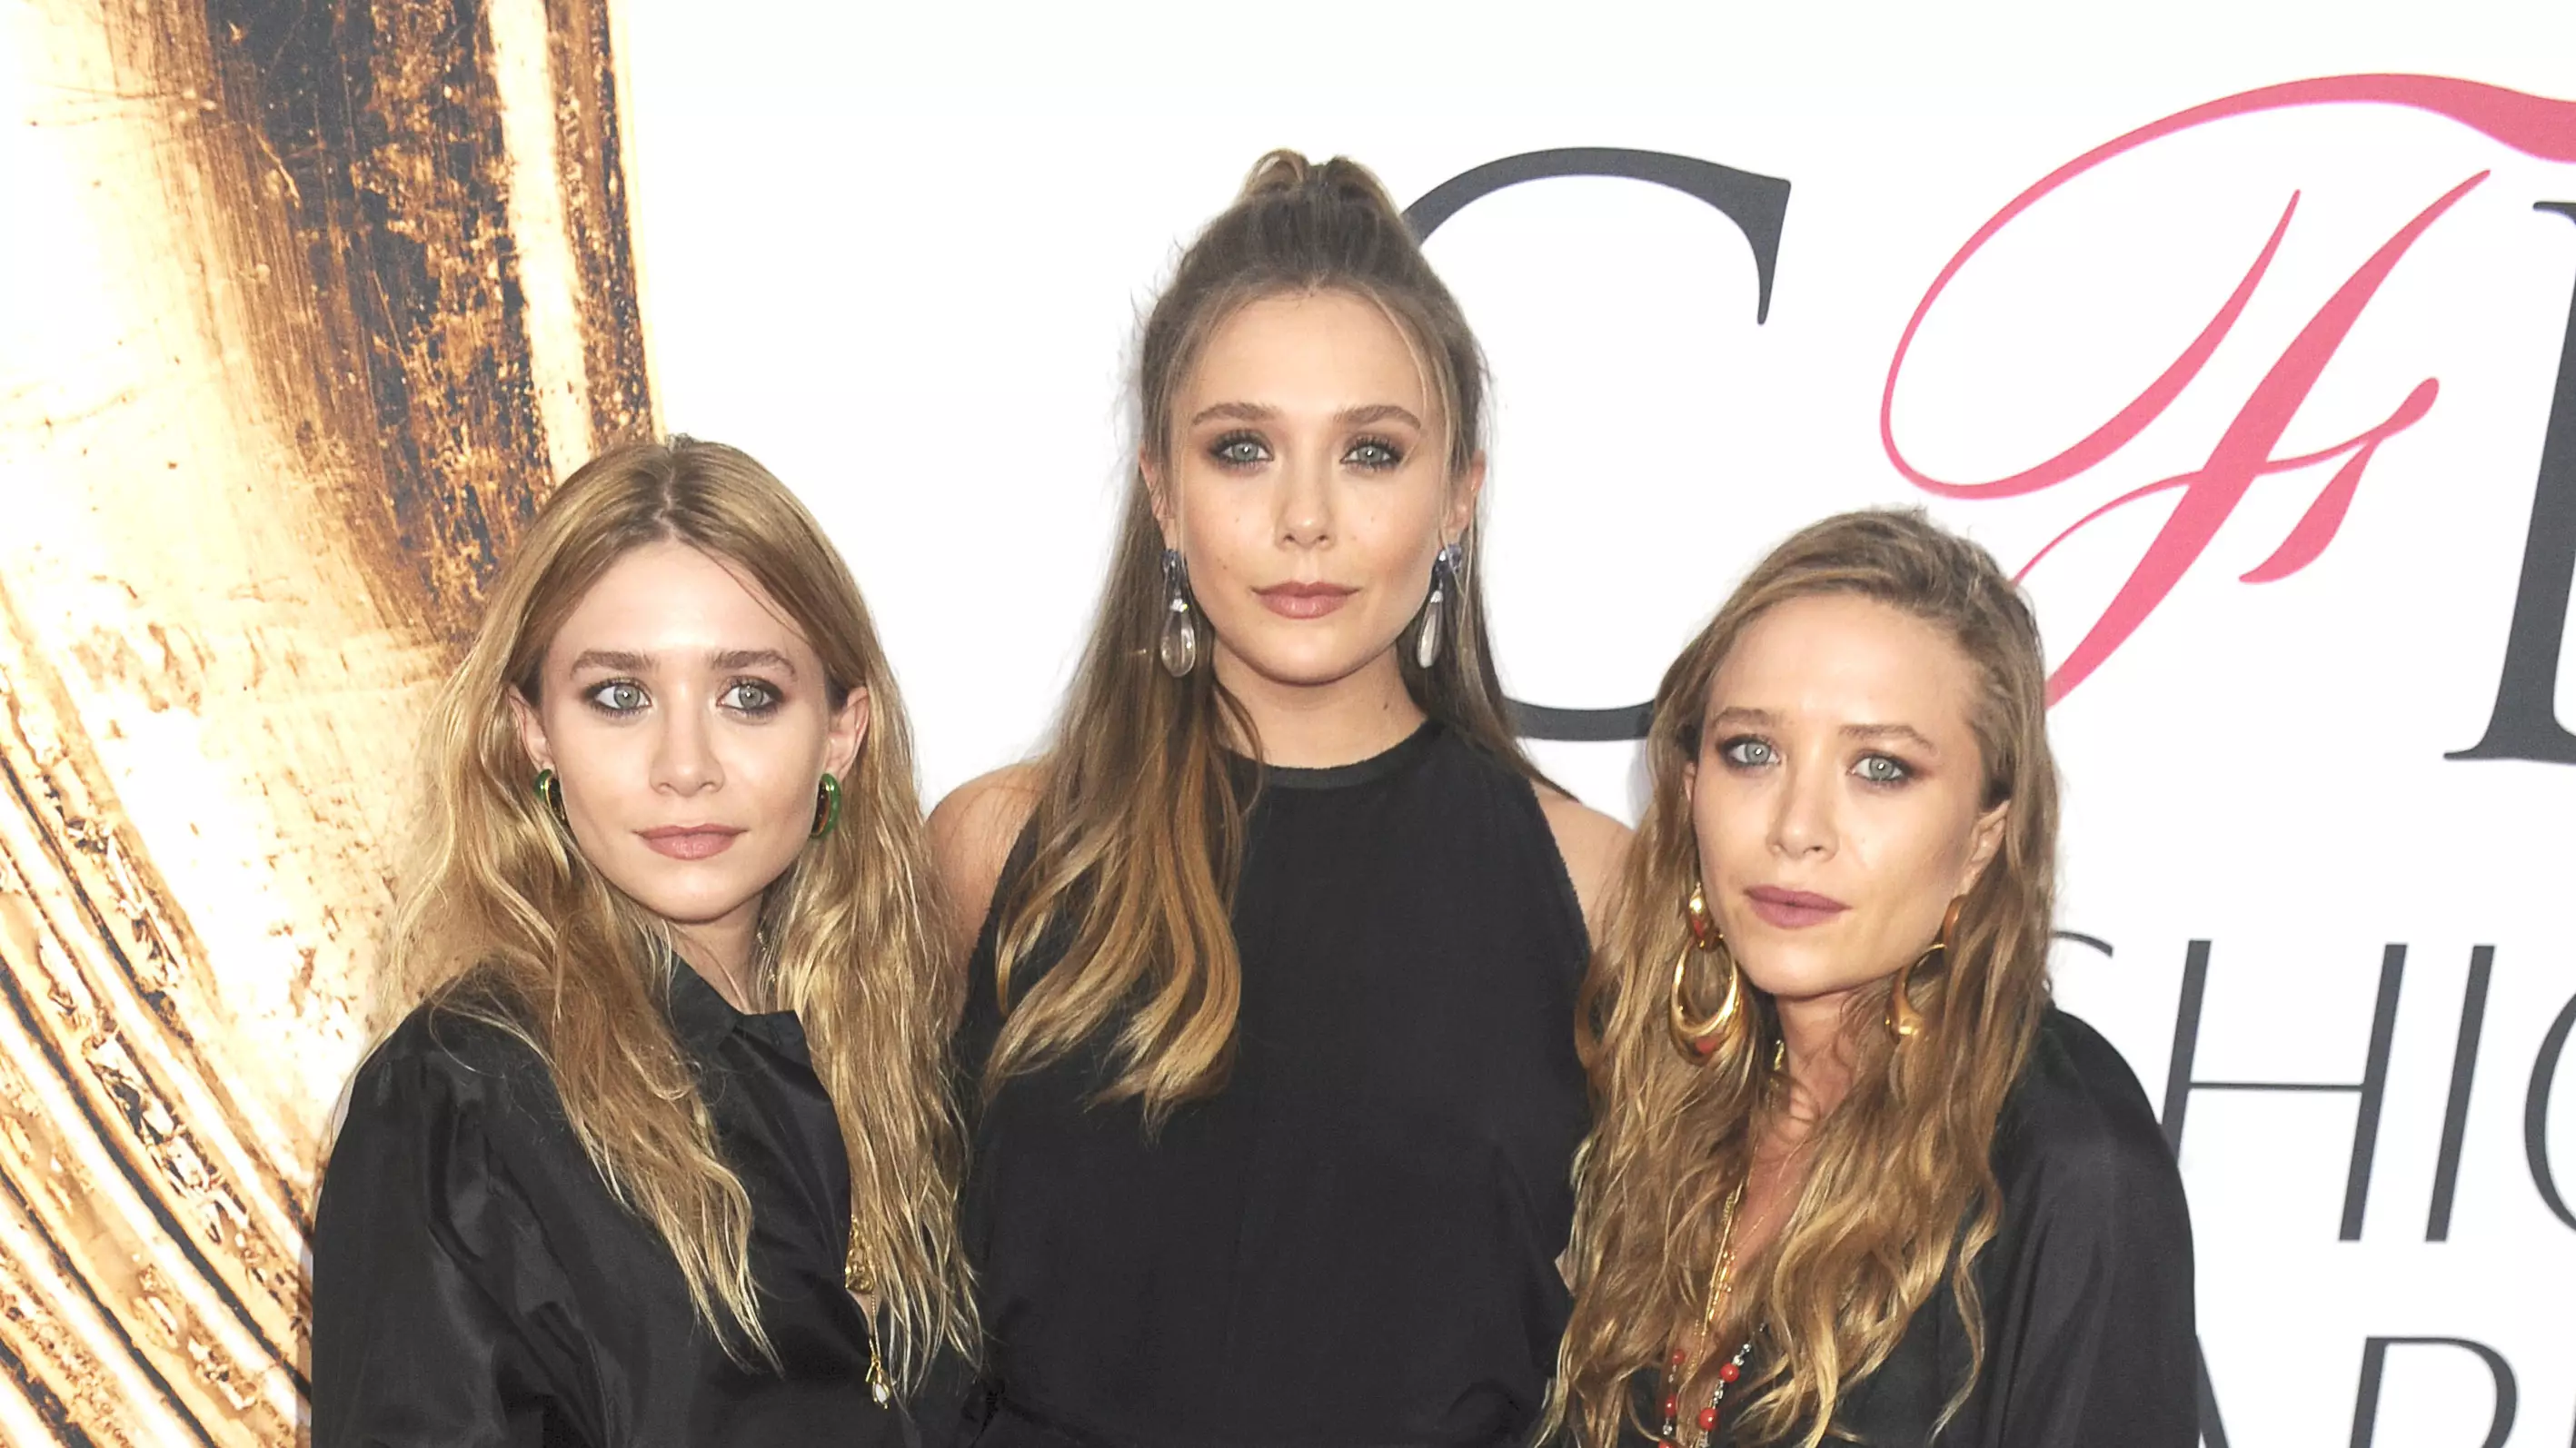 Some People Have Just Discovered Elizabeth Olsen Is The Olsen Twins' Sister